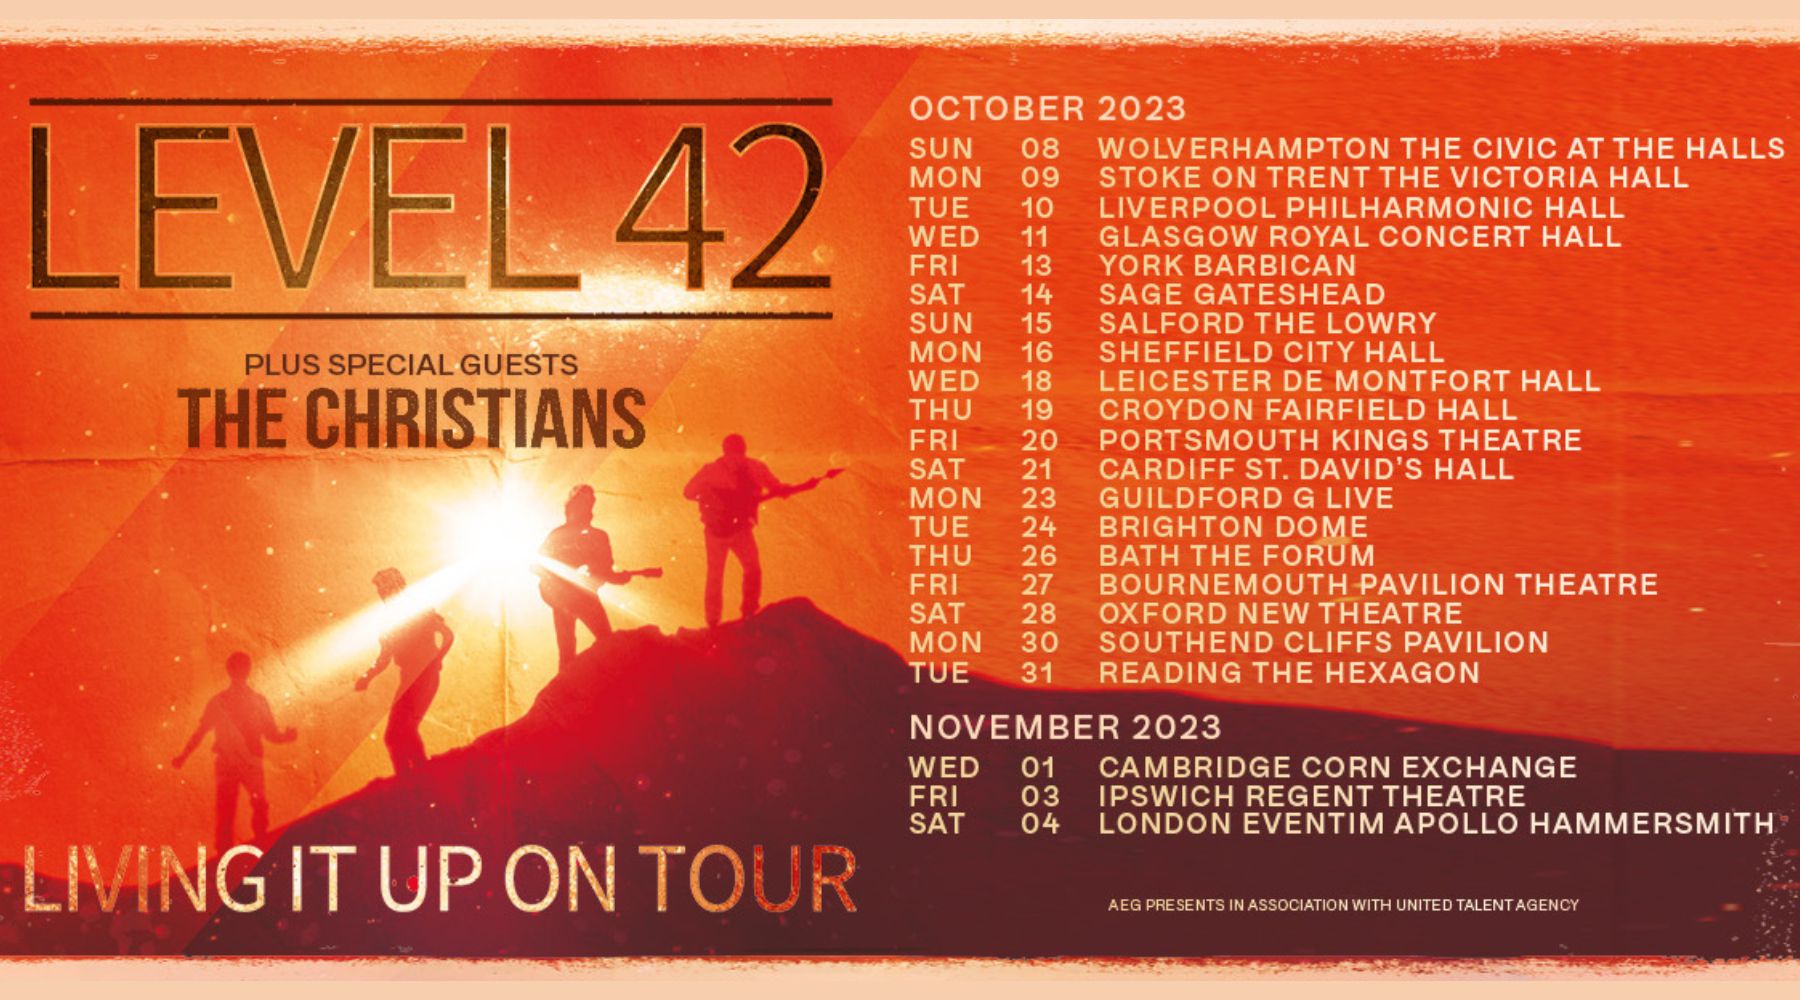 level 42 tour poster